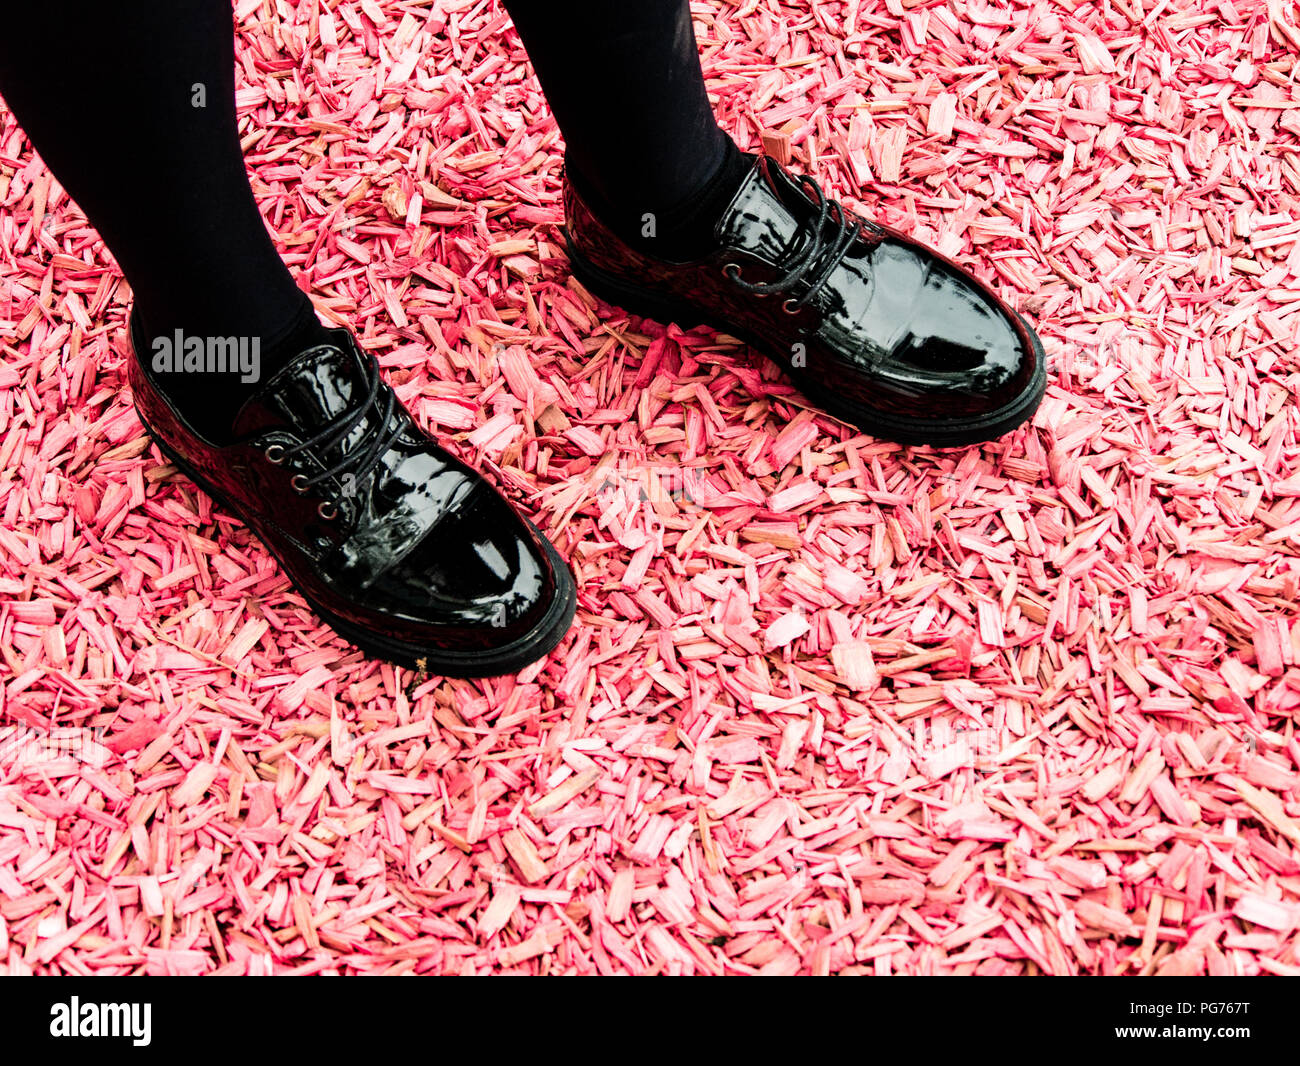 Girl's shiny black shoes on pink woodchip ground Stock Photo - Alamy